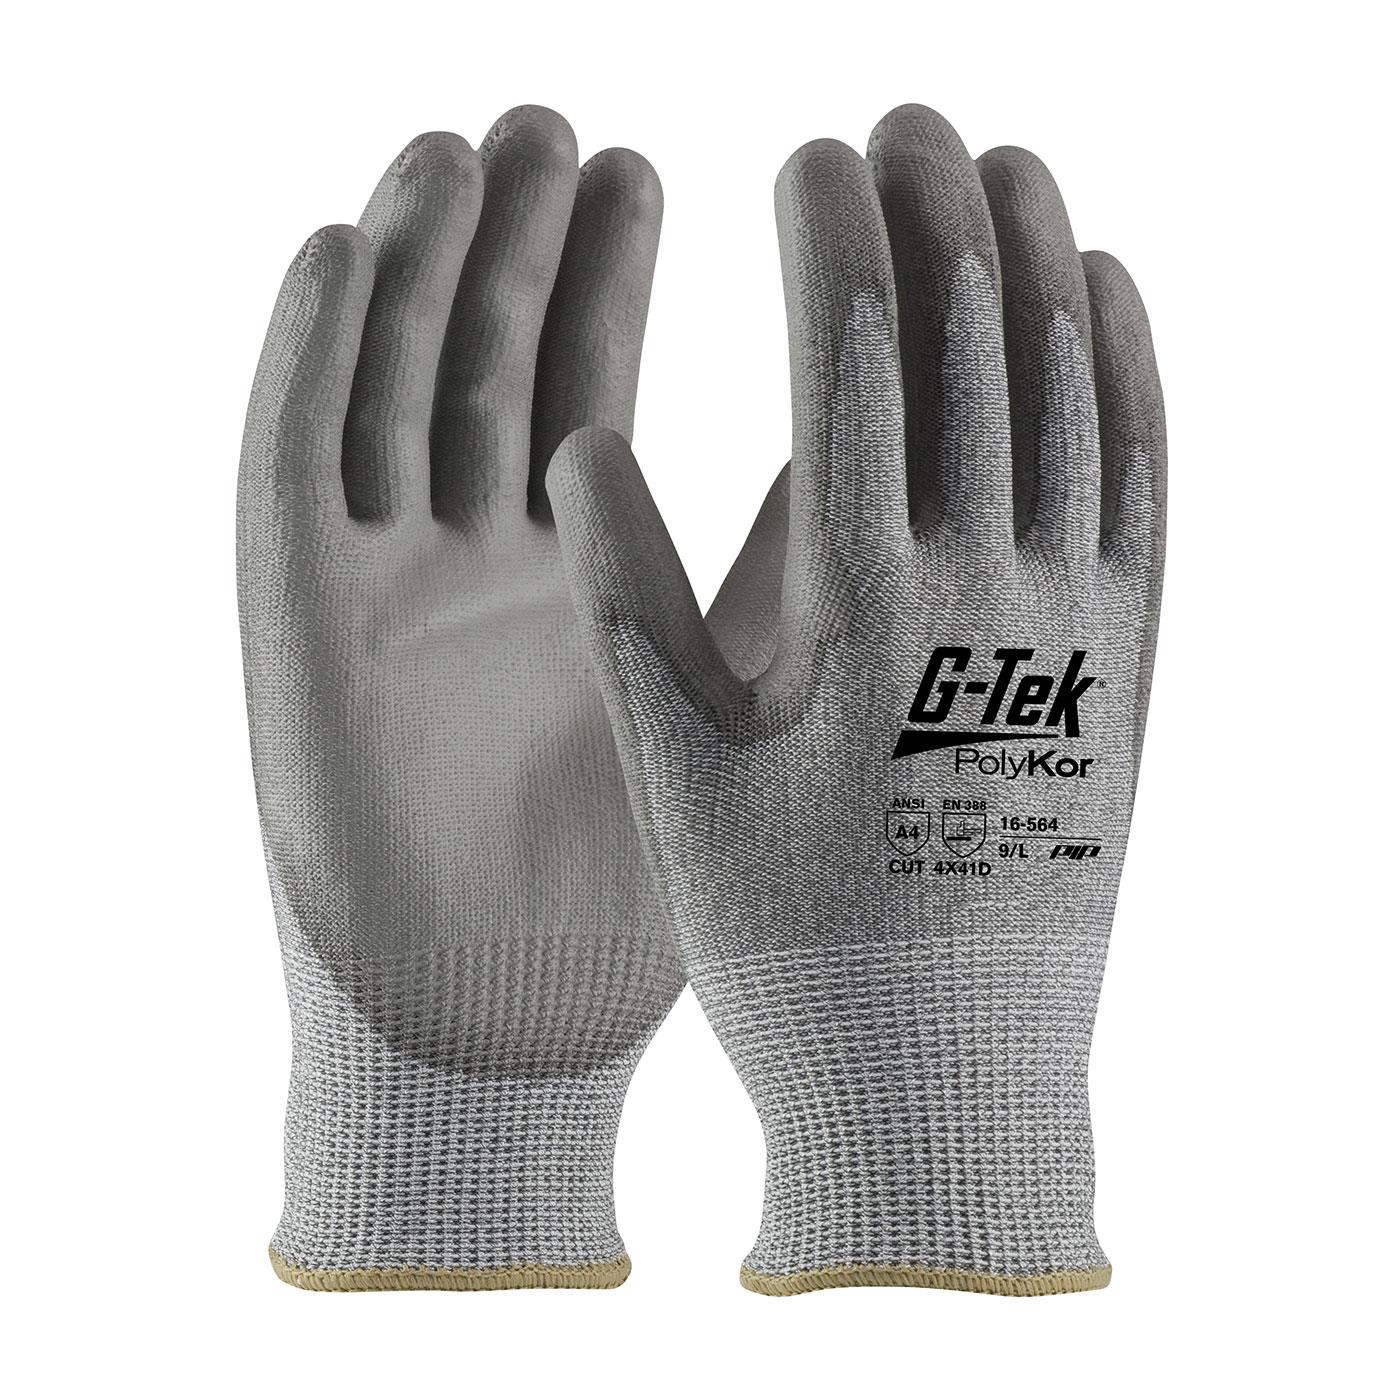 G-TEK POLYKOR 16-564 PU PALM COAT - Tagged Gloves